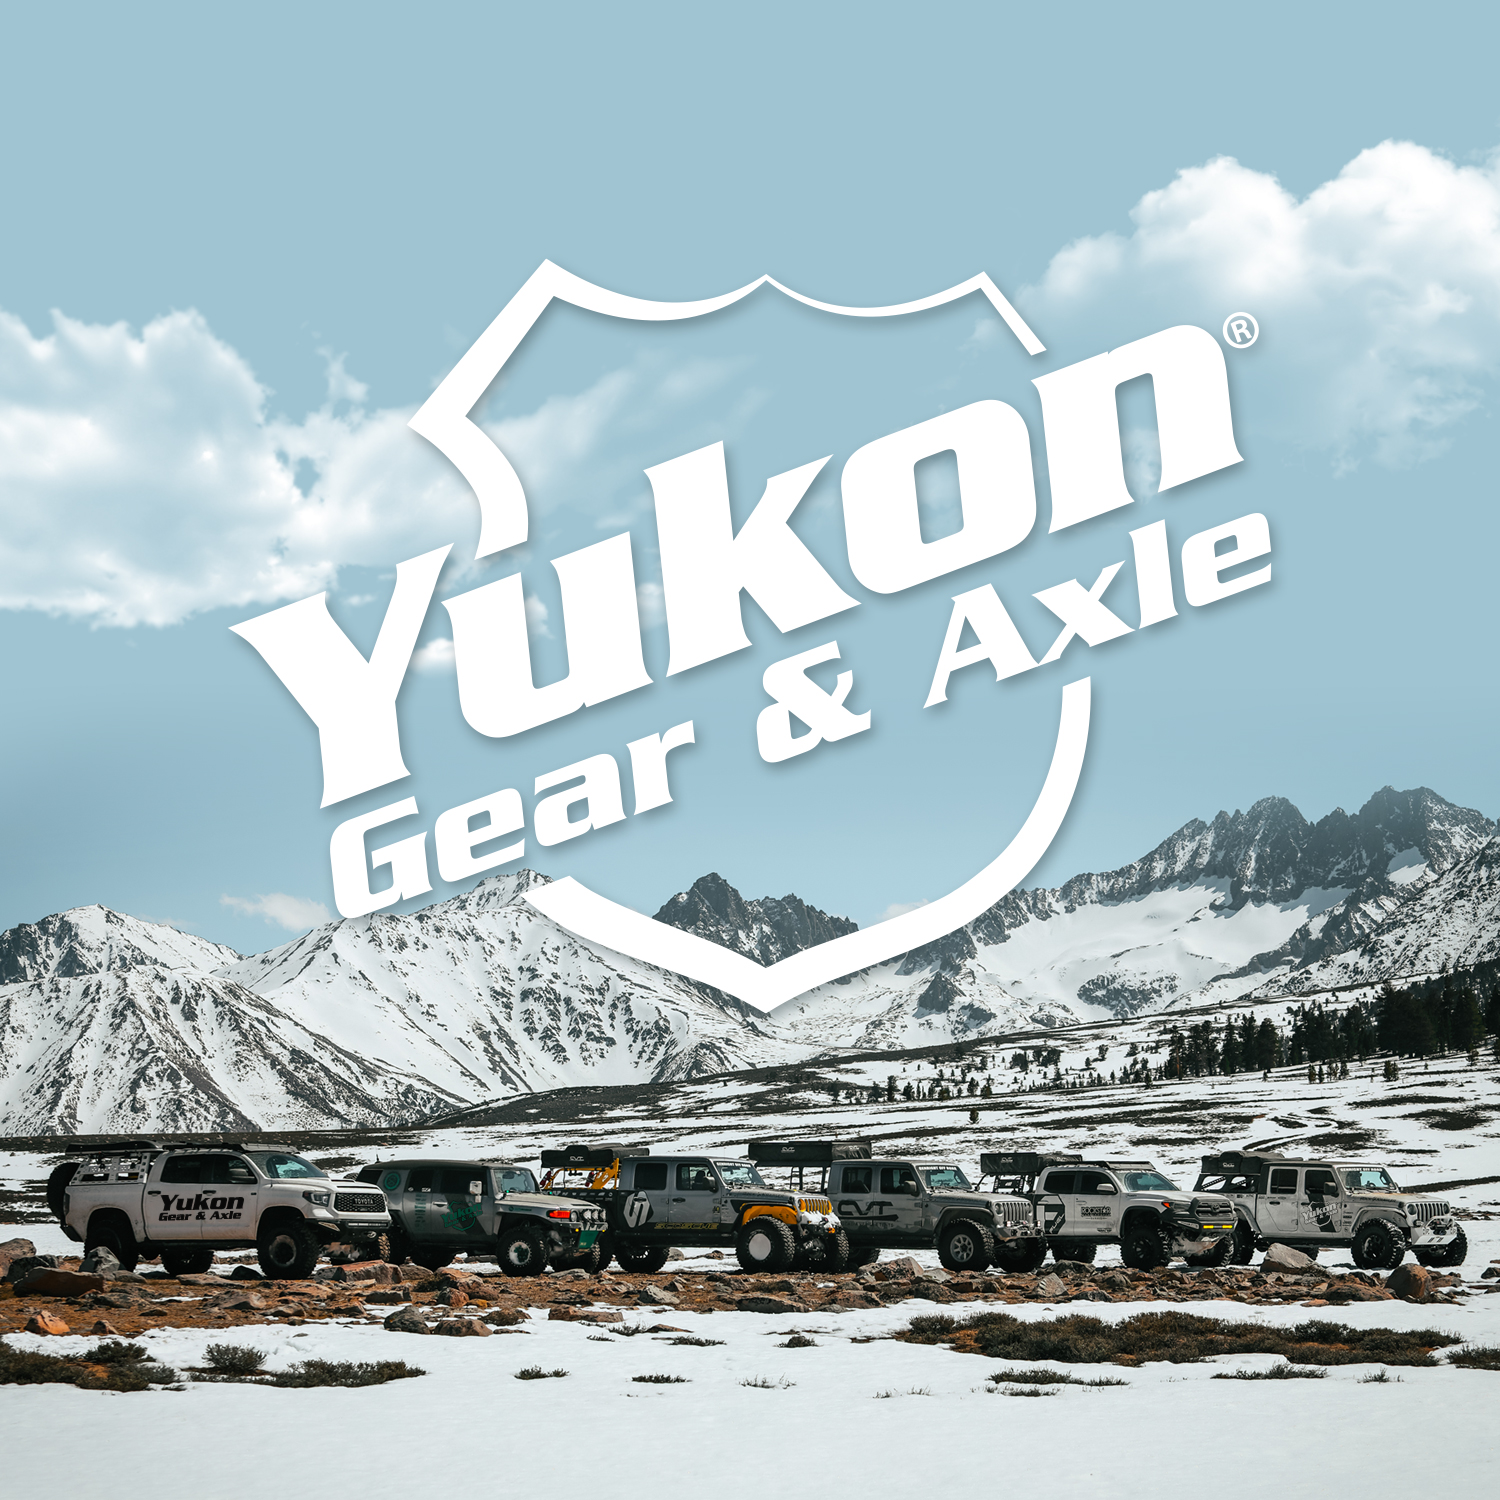 Yukon high performance Ring & Pinion replacement gear set, Dana 30, 4.88 ratio 